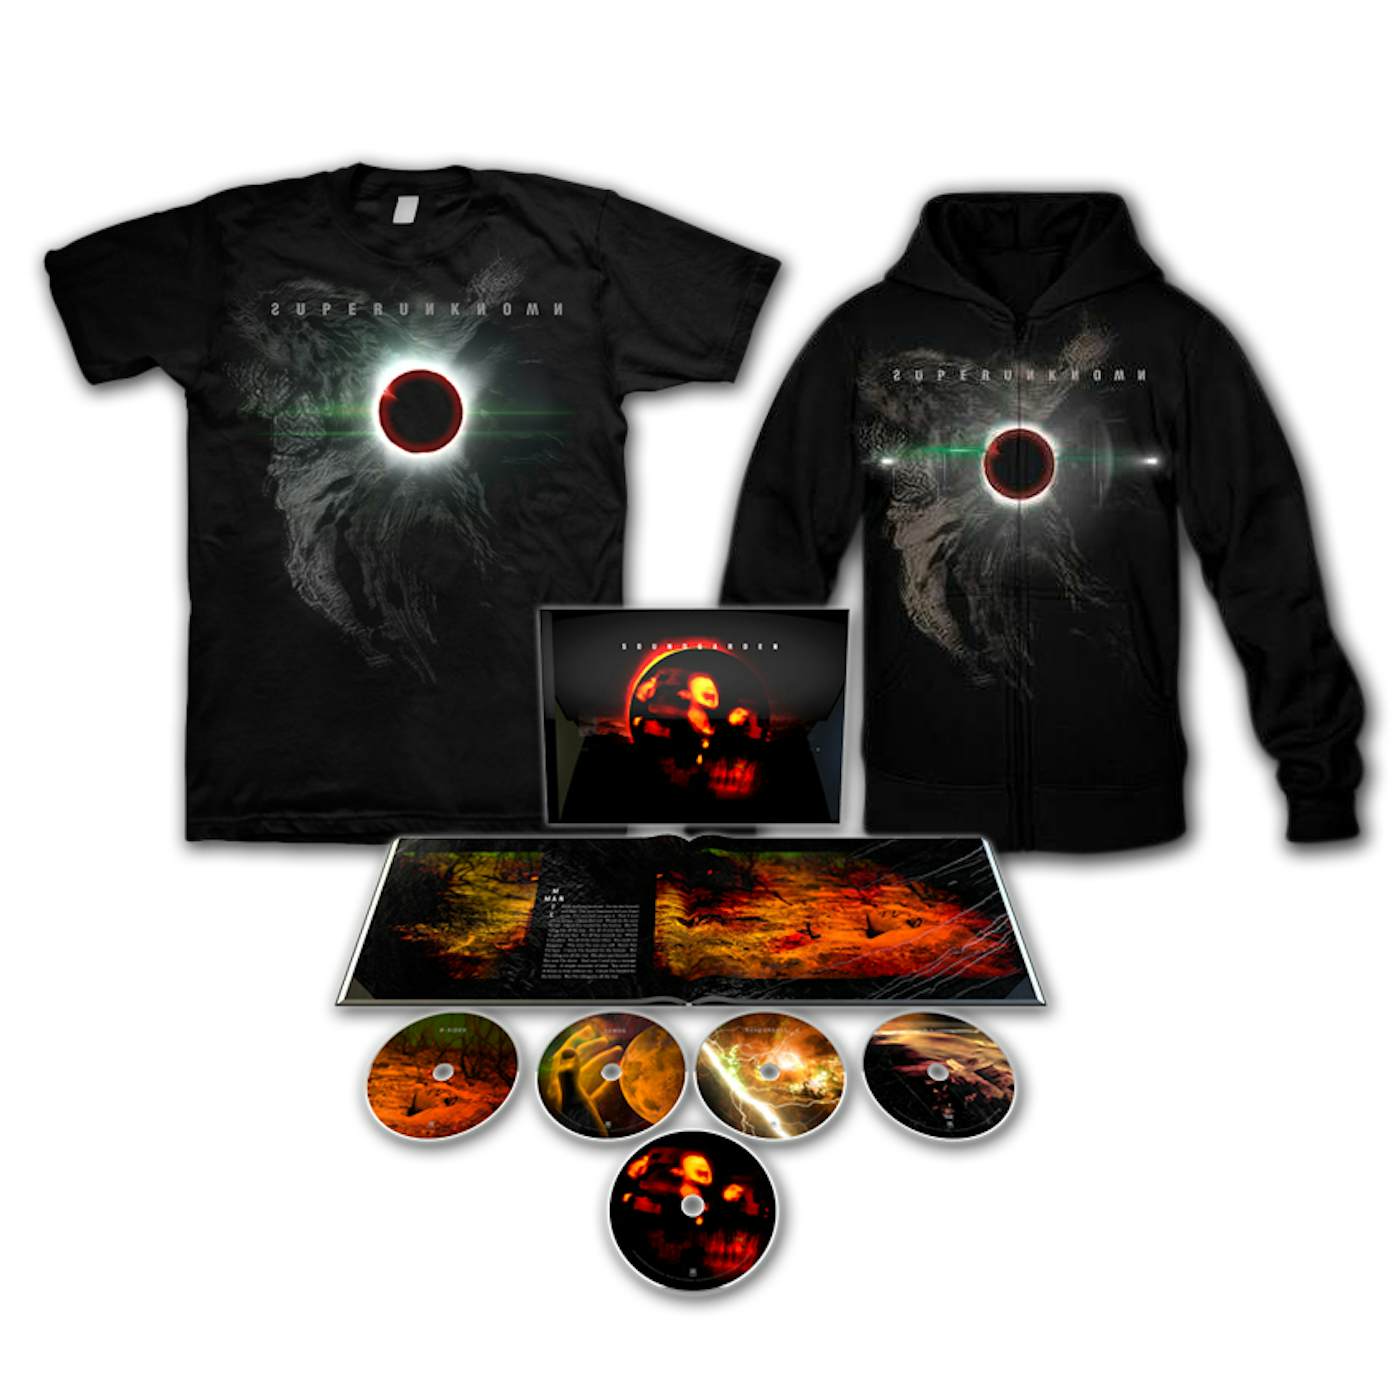 Soundgarden Superunknown Super Deluxe CD Set/T-Shirt/Hoodie Bundle